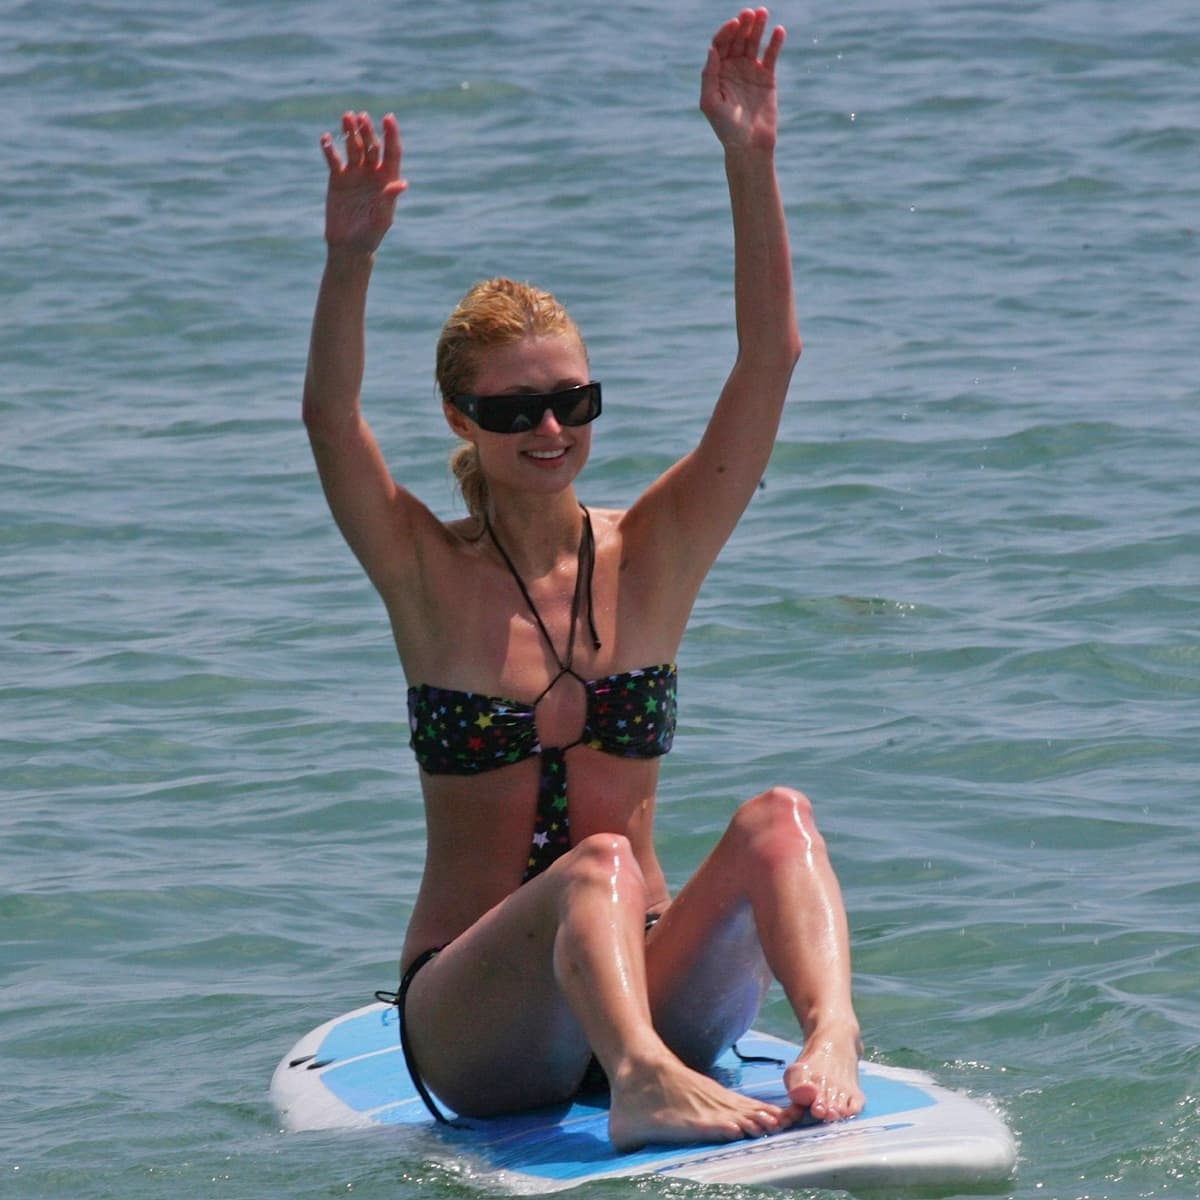 Paris Hilton attempts to surf at Malibu Beach Malibu, California, on July 15, 2007